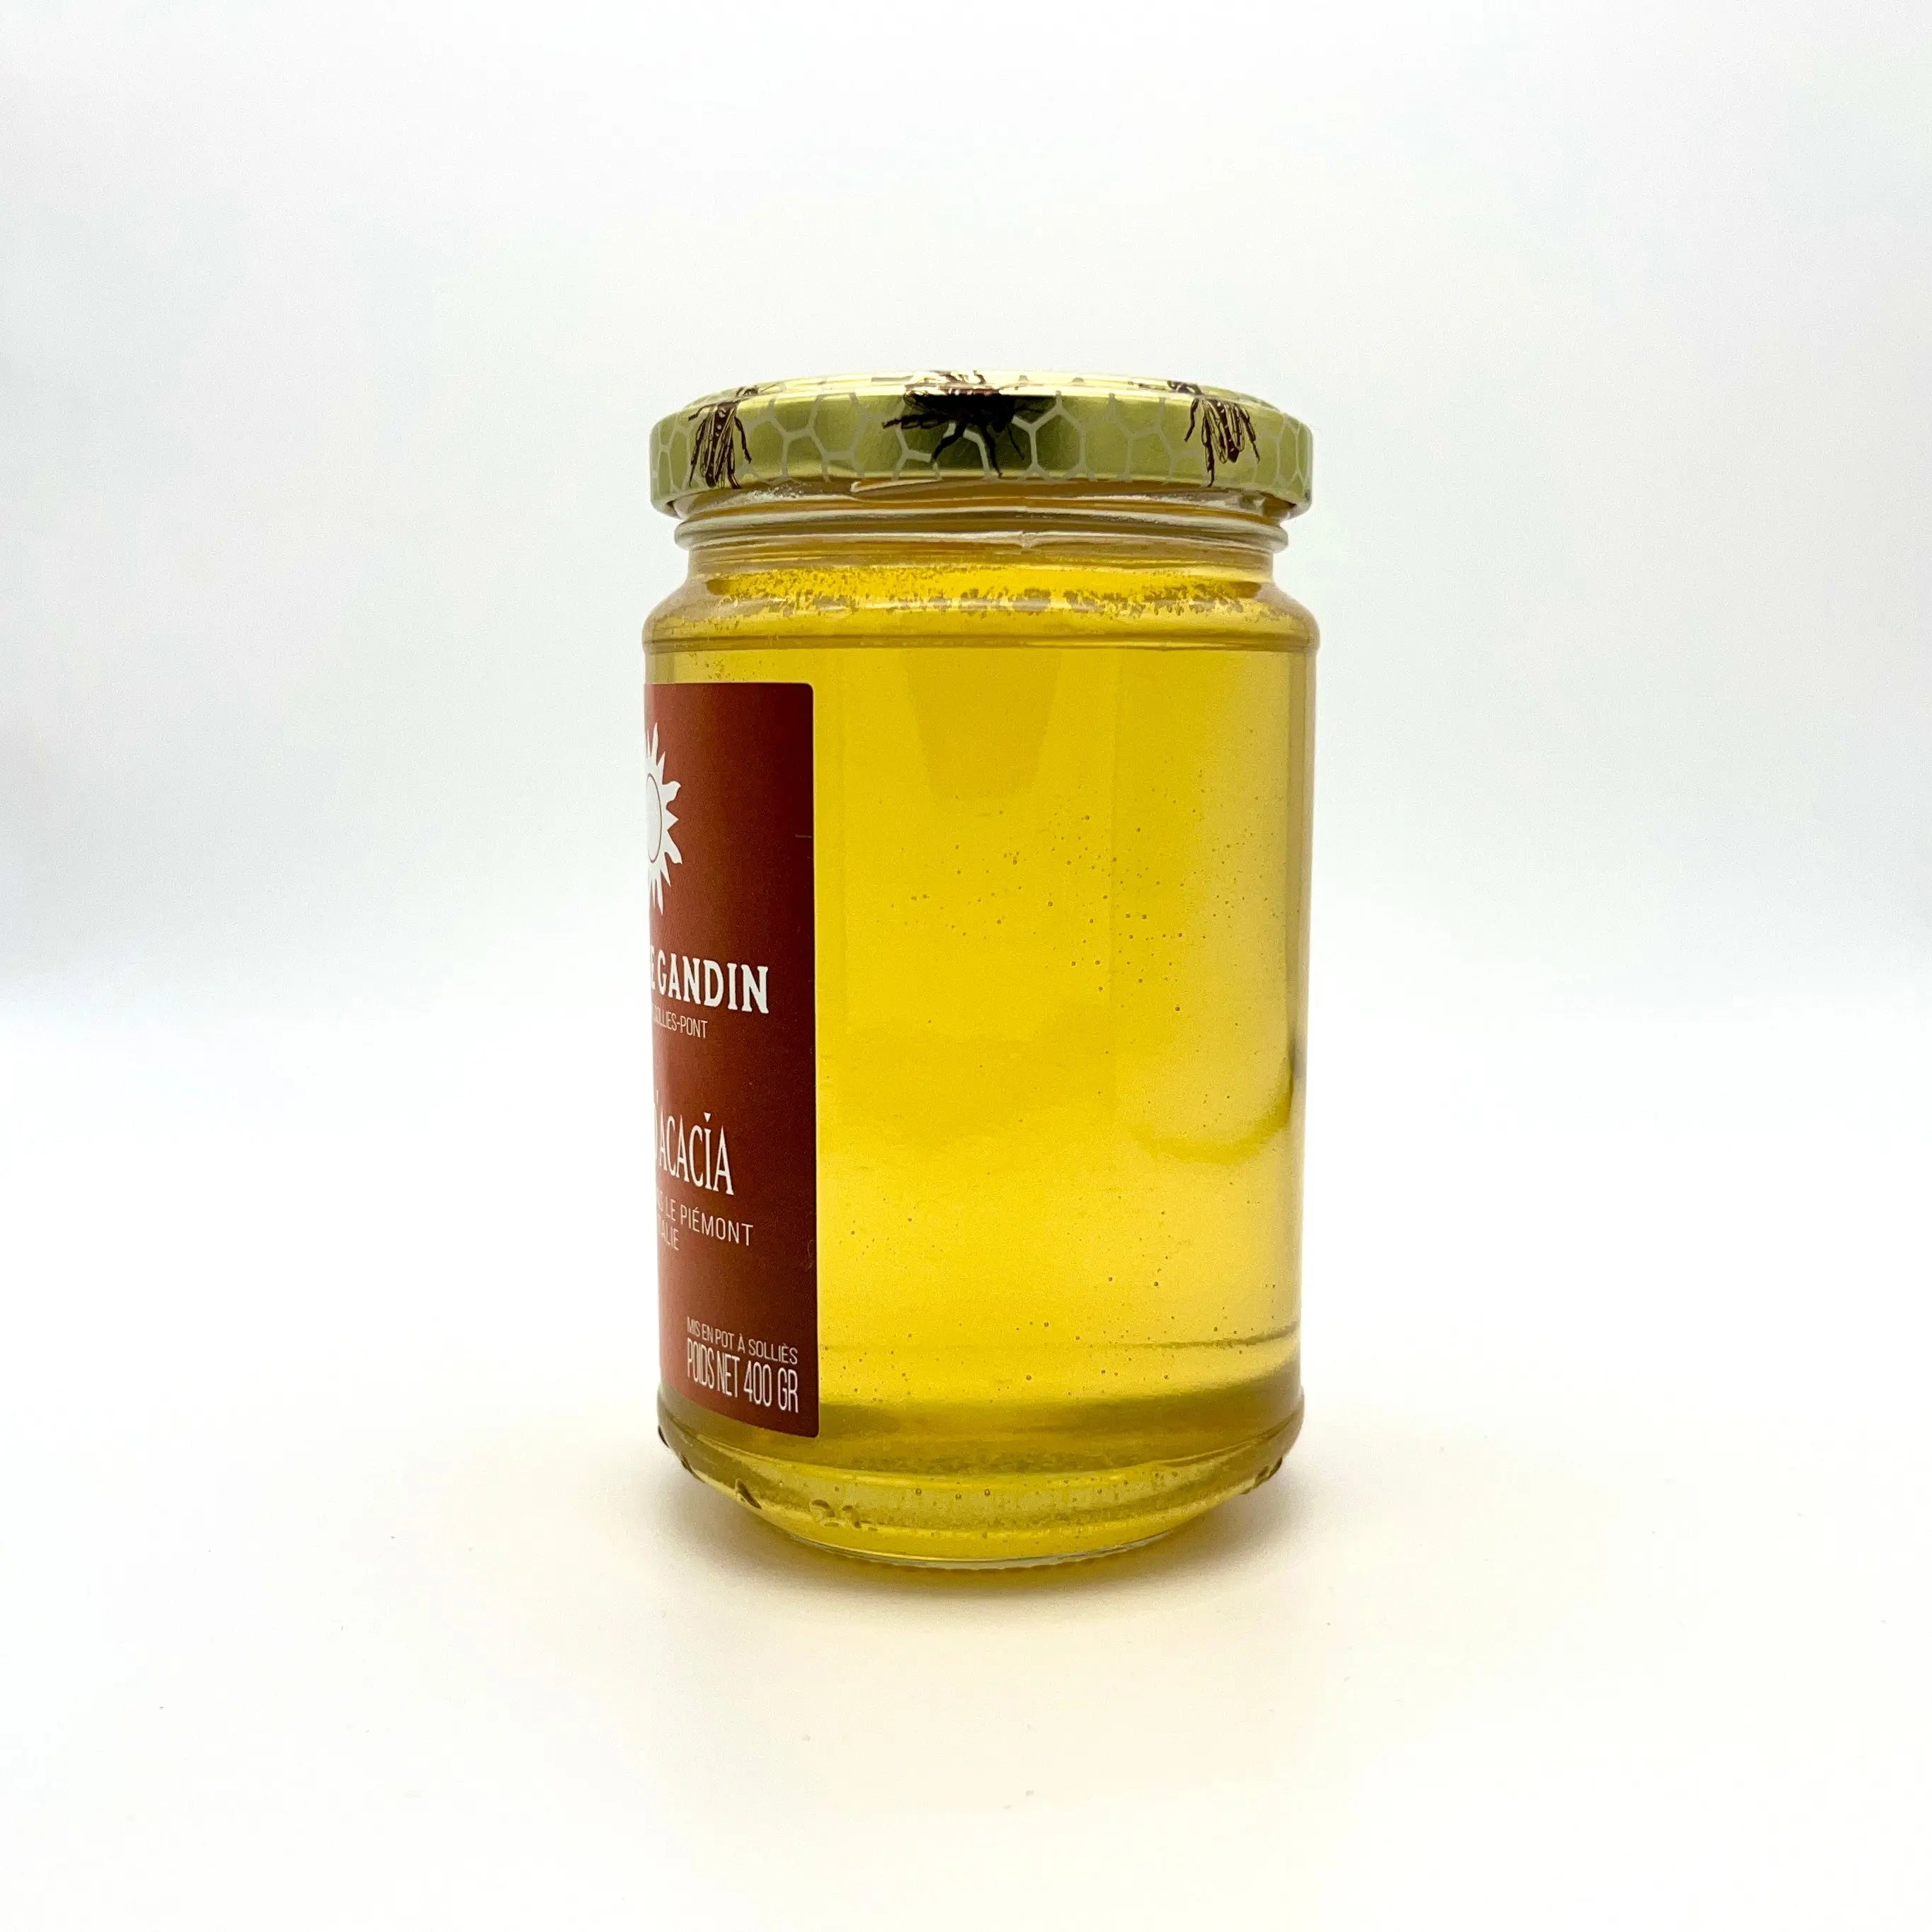 Miel traditionnel d'Acacia, famille GANDIN, apiculteurs